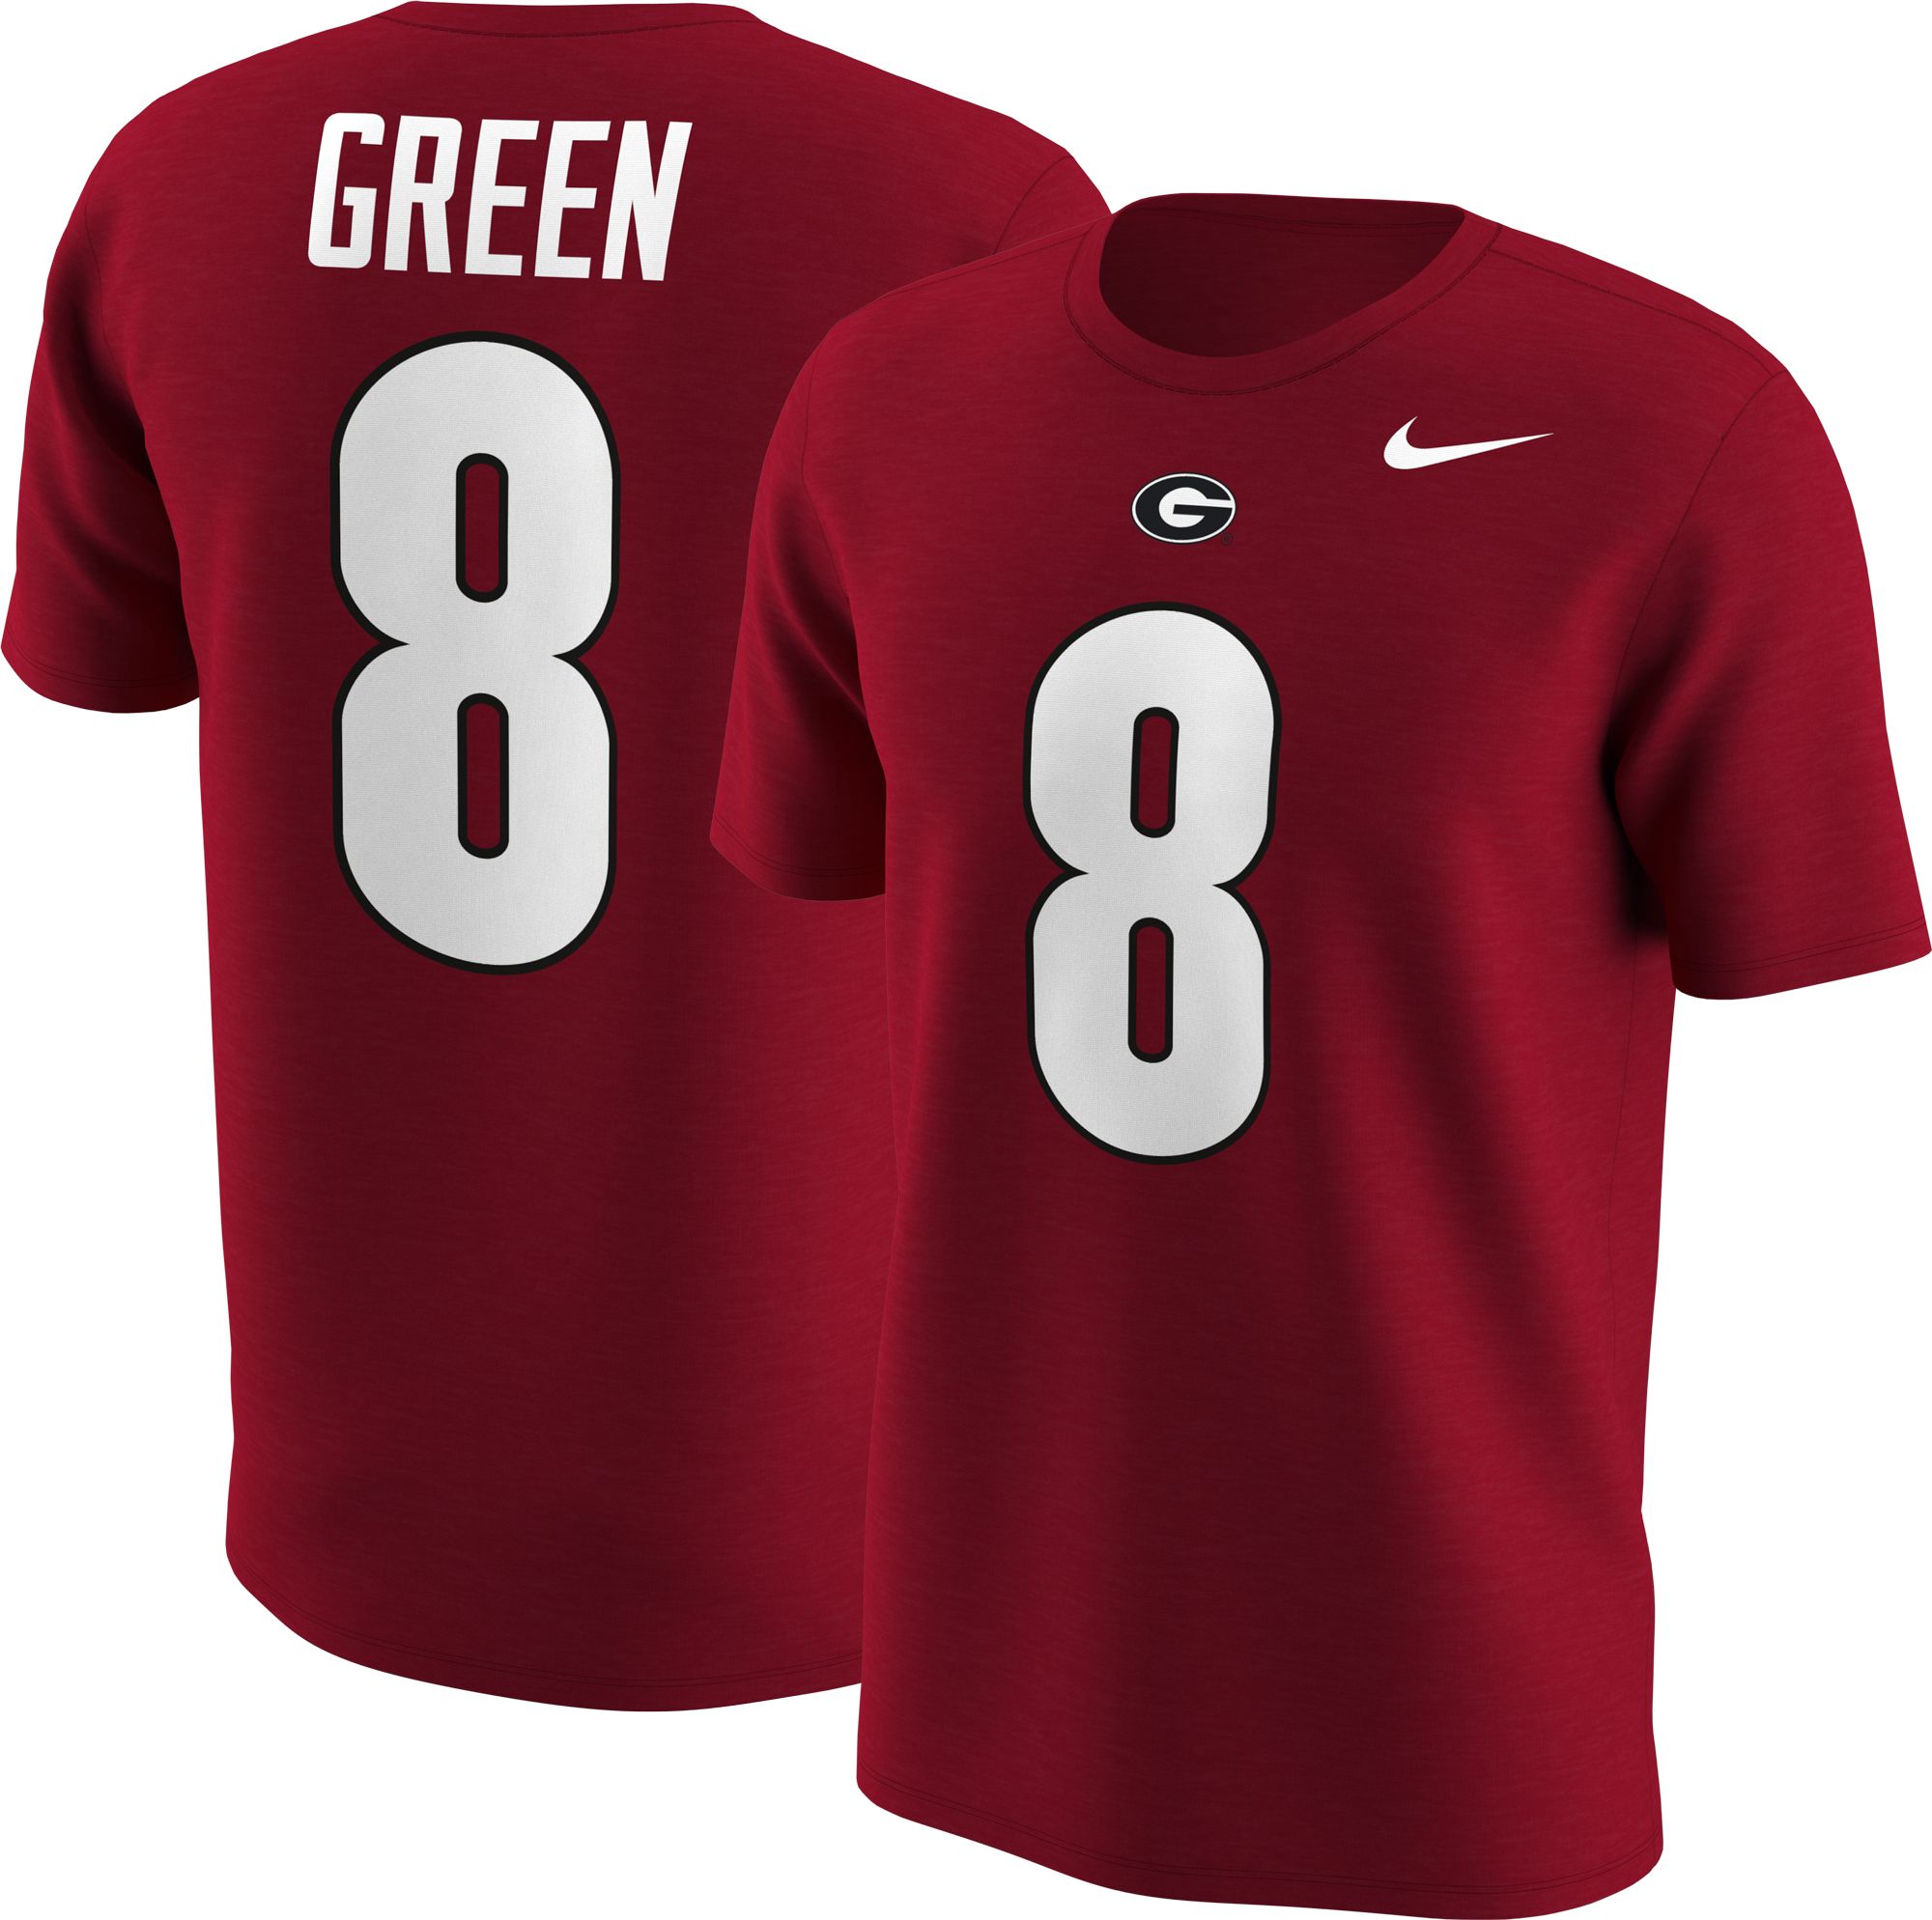 AJ Green #8 Red Football Jersey T-Shirt 